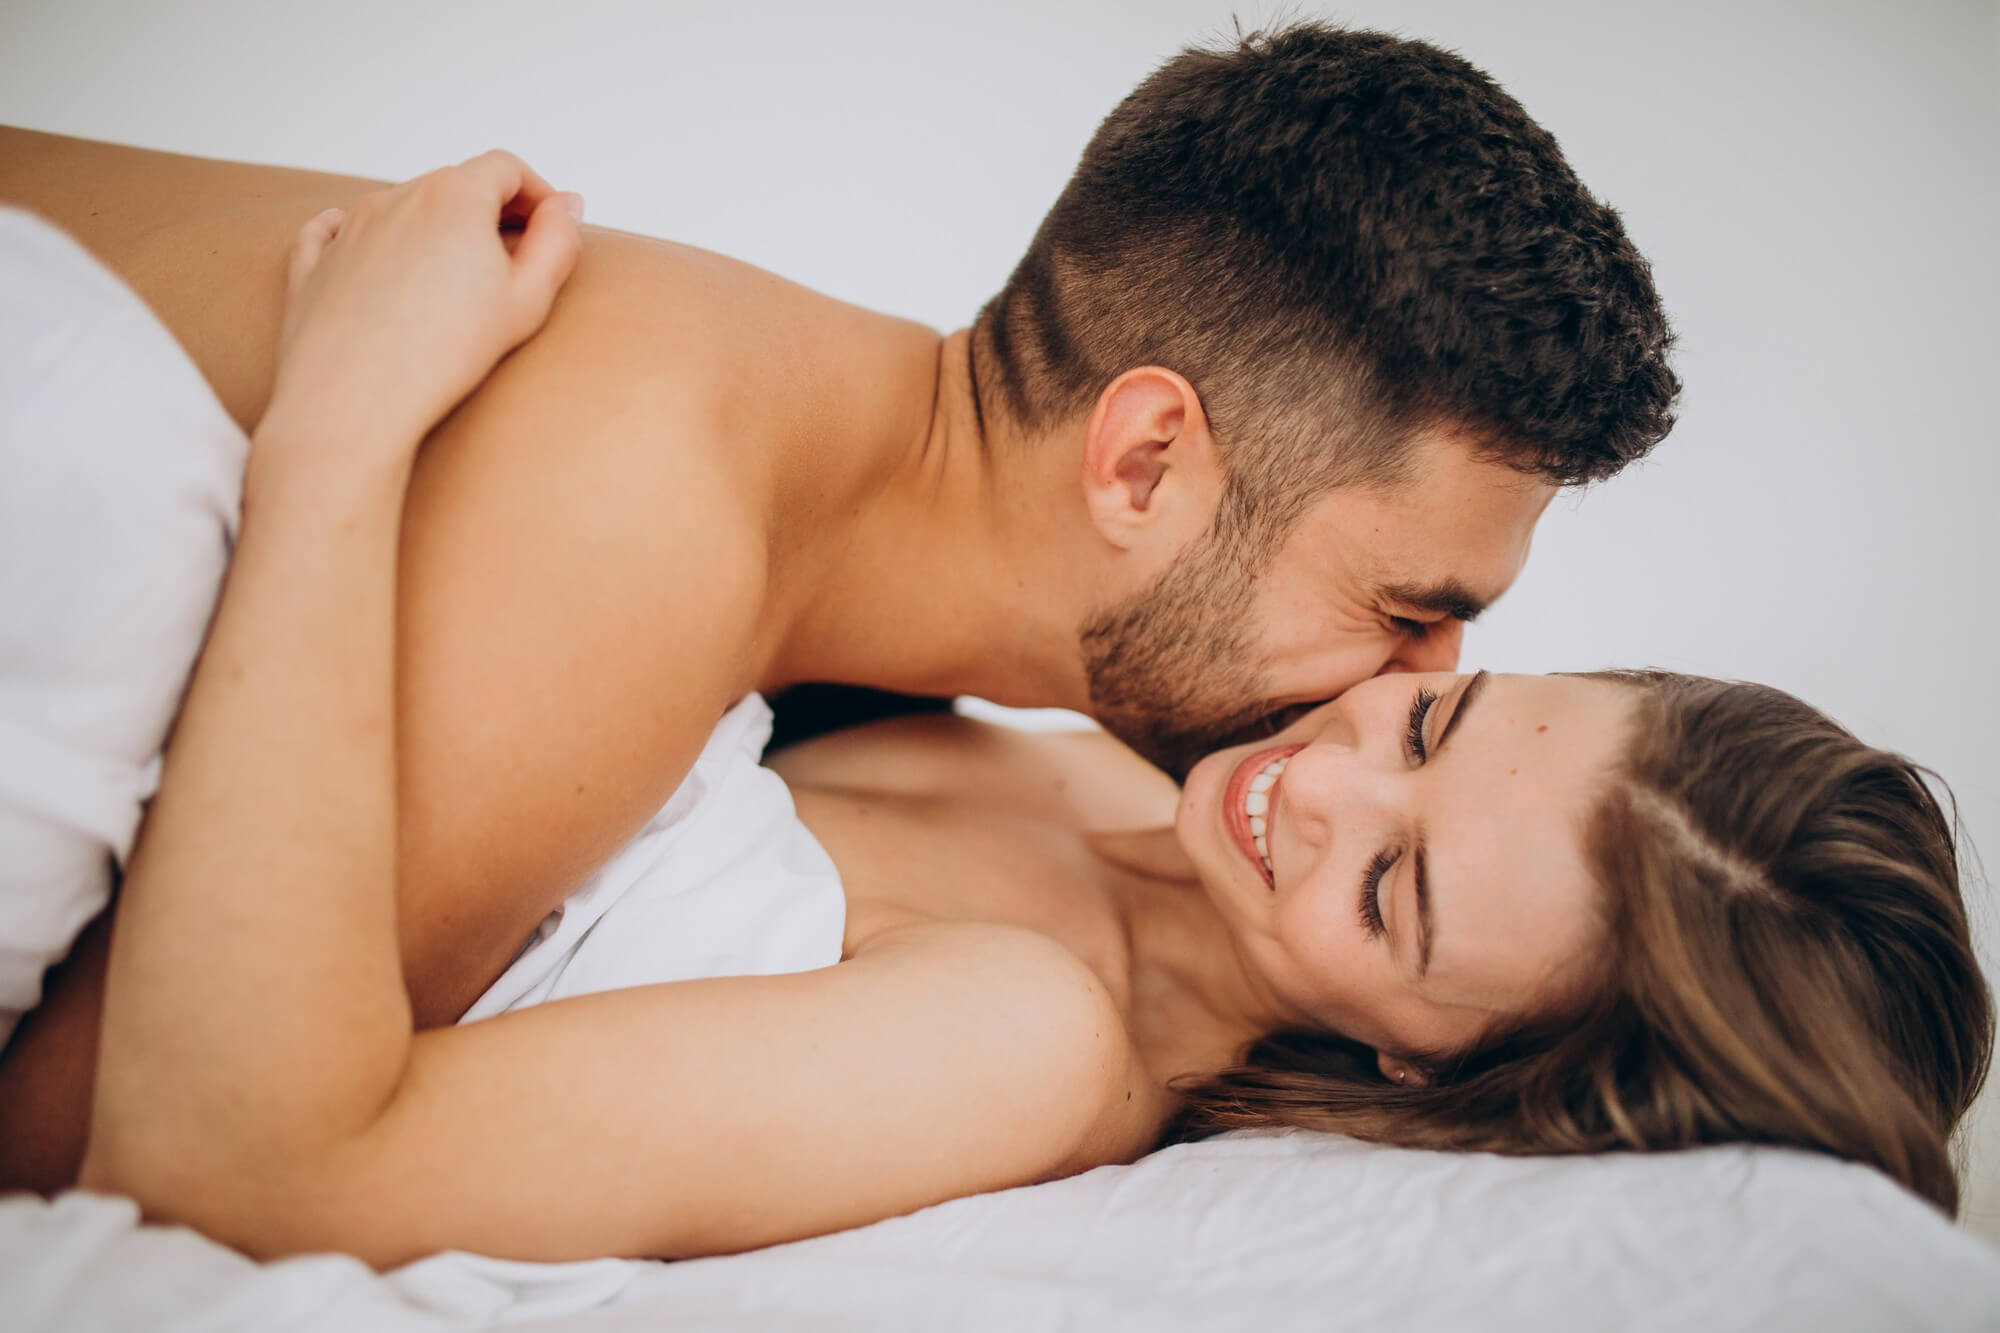 razlicite poze u seksu mogu vas dovesti do orgazma